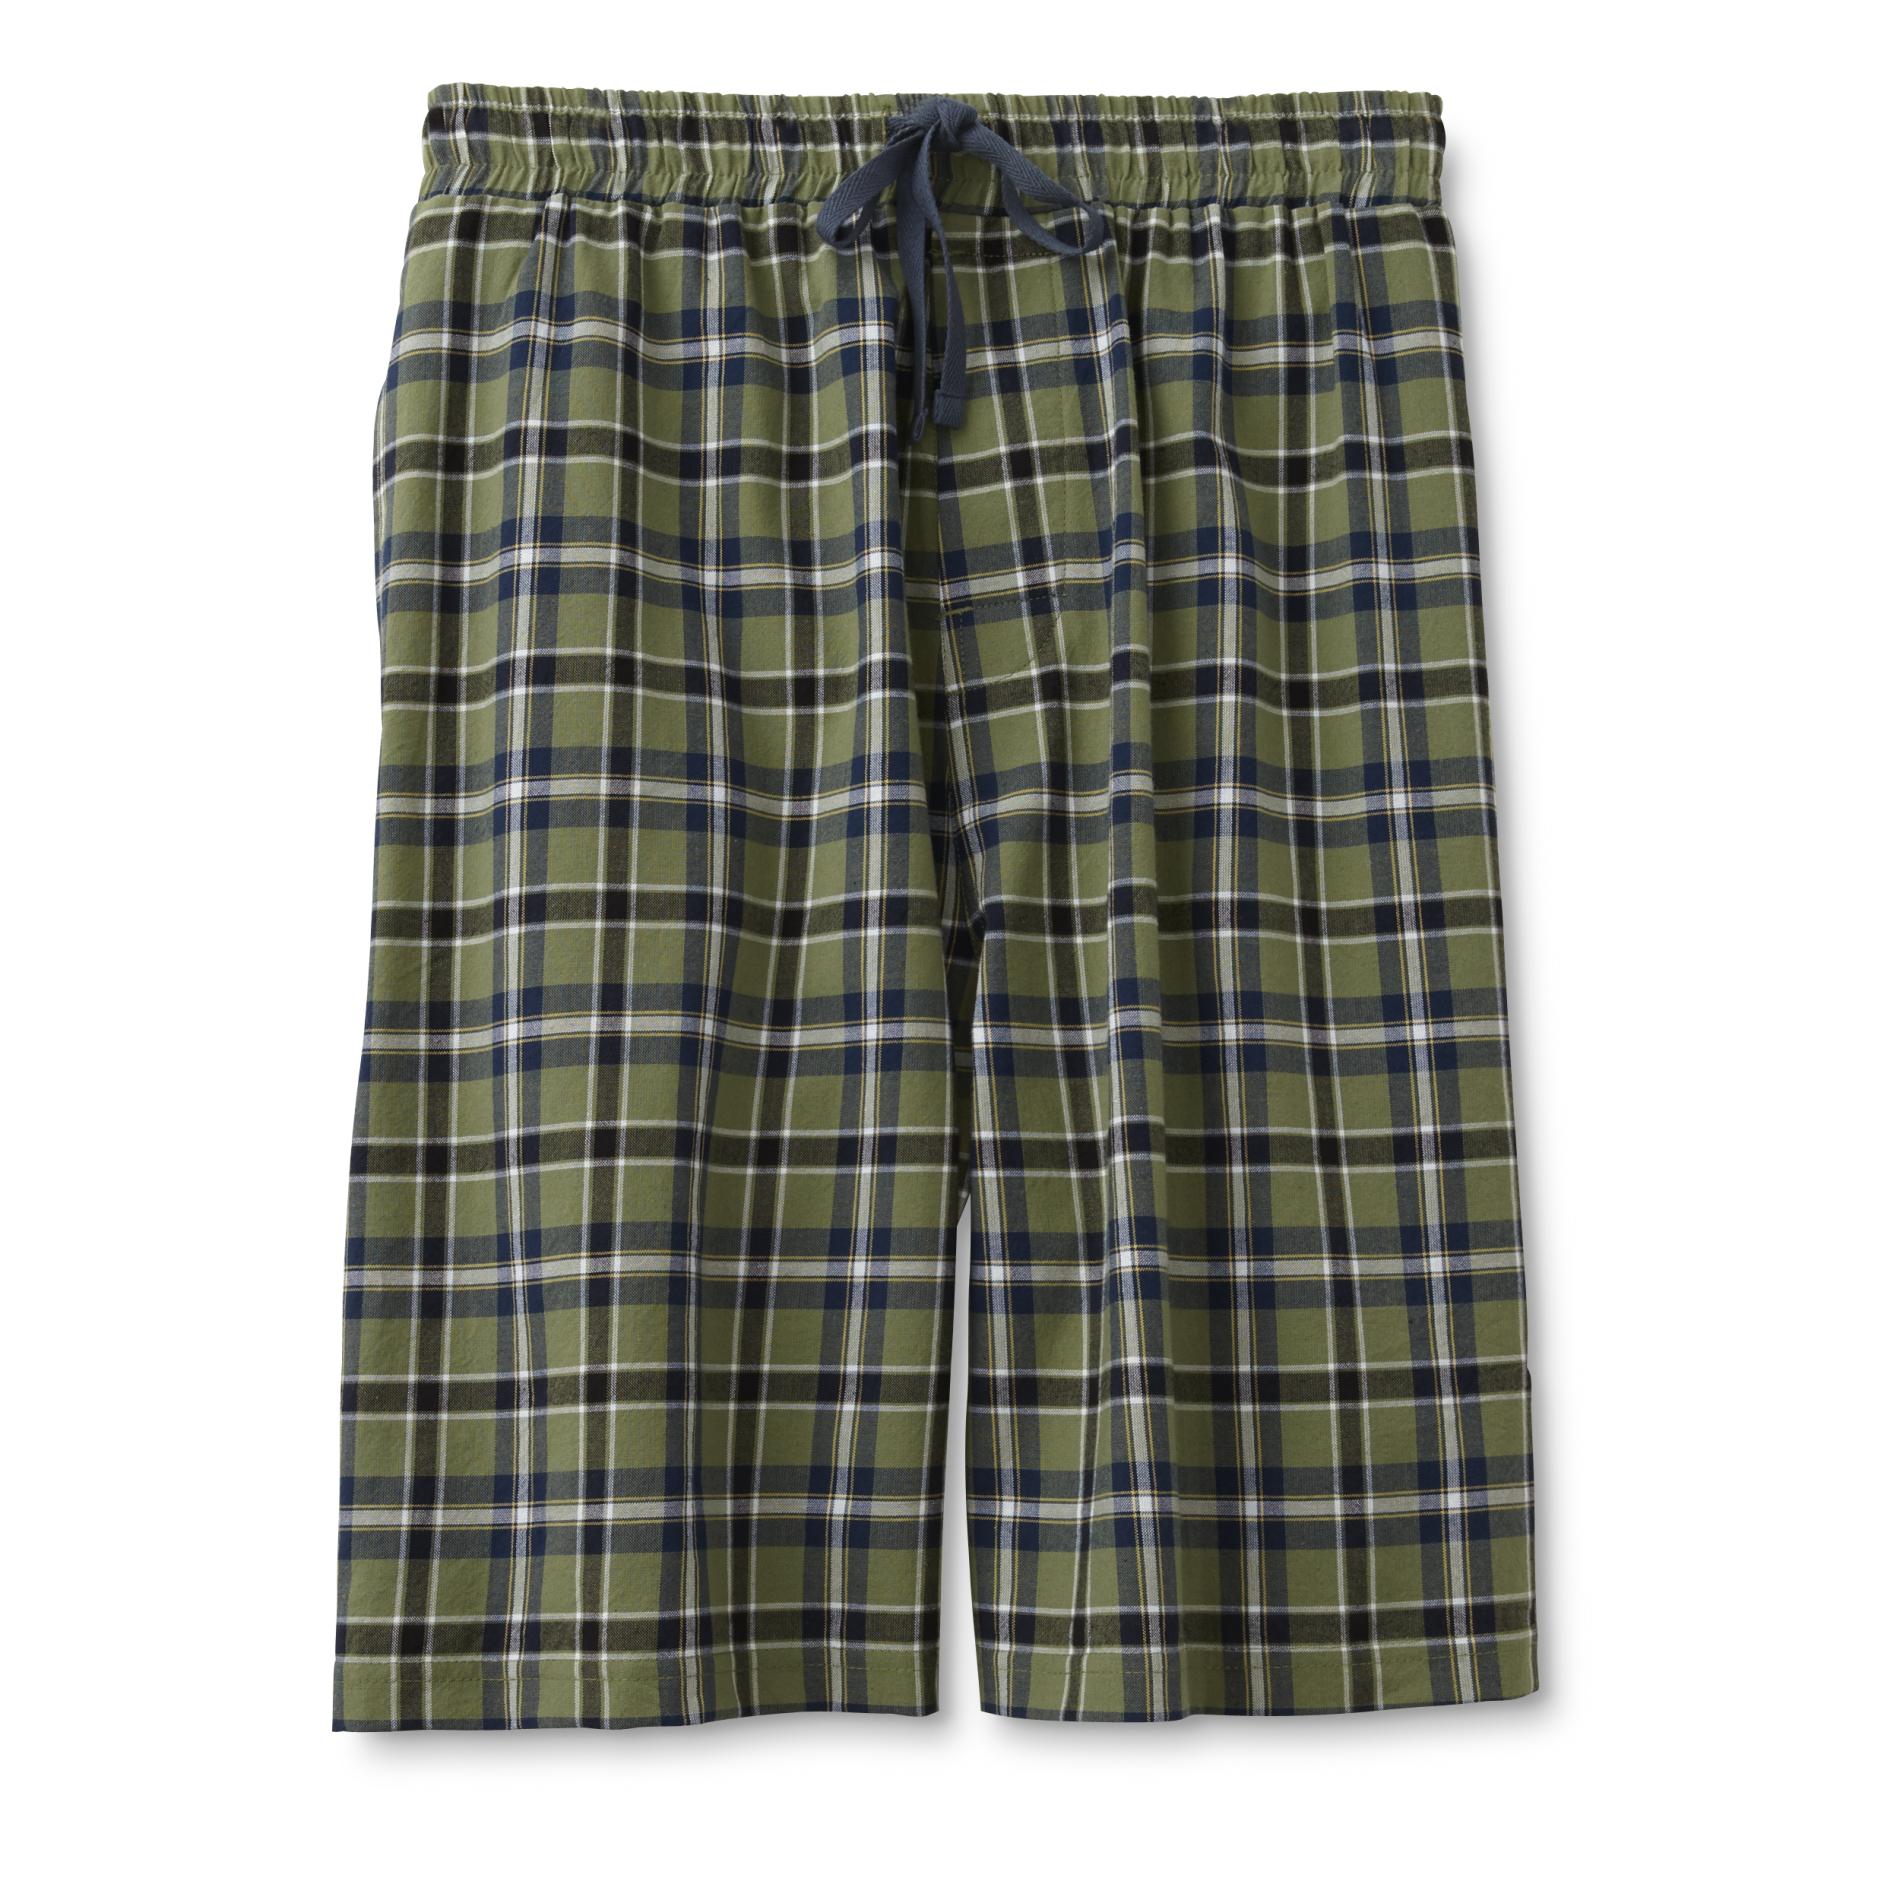 Joe Boxer Men's Pajama Shorts - Plaid